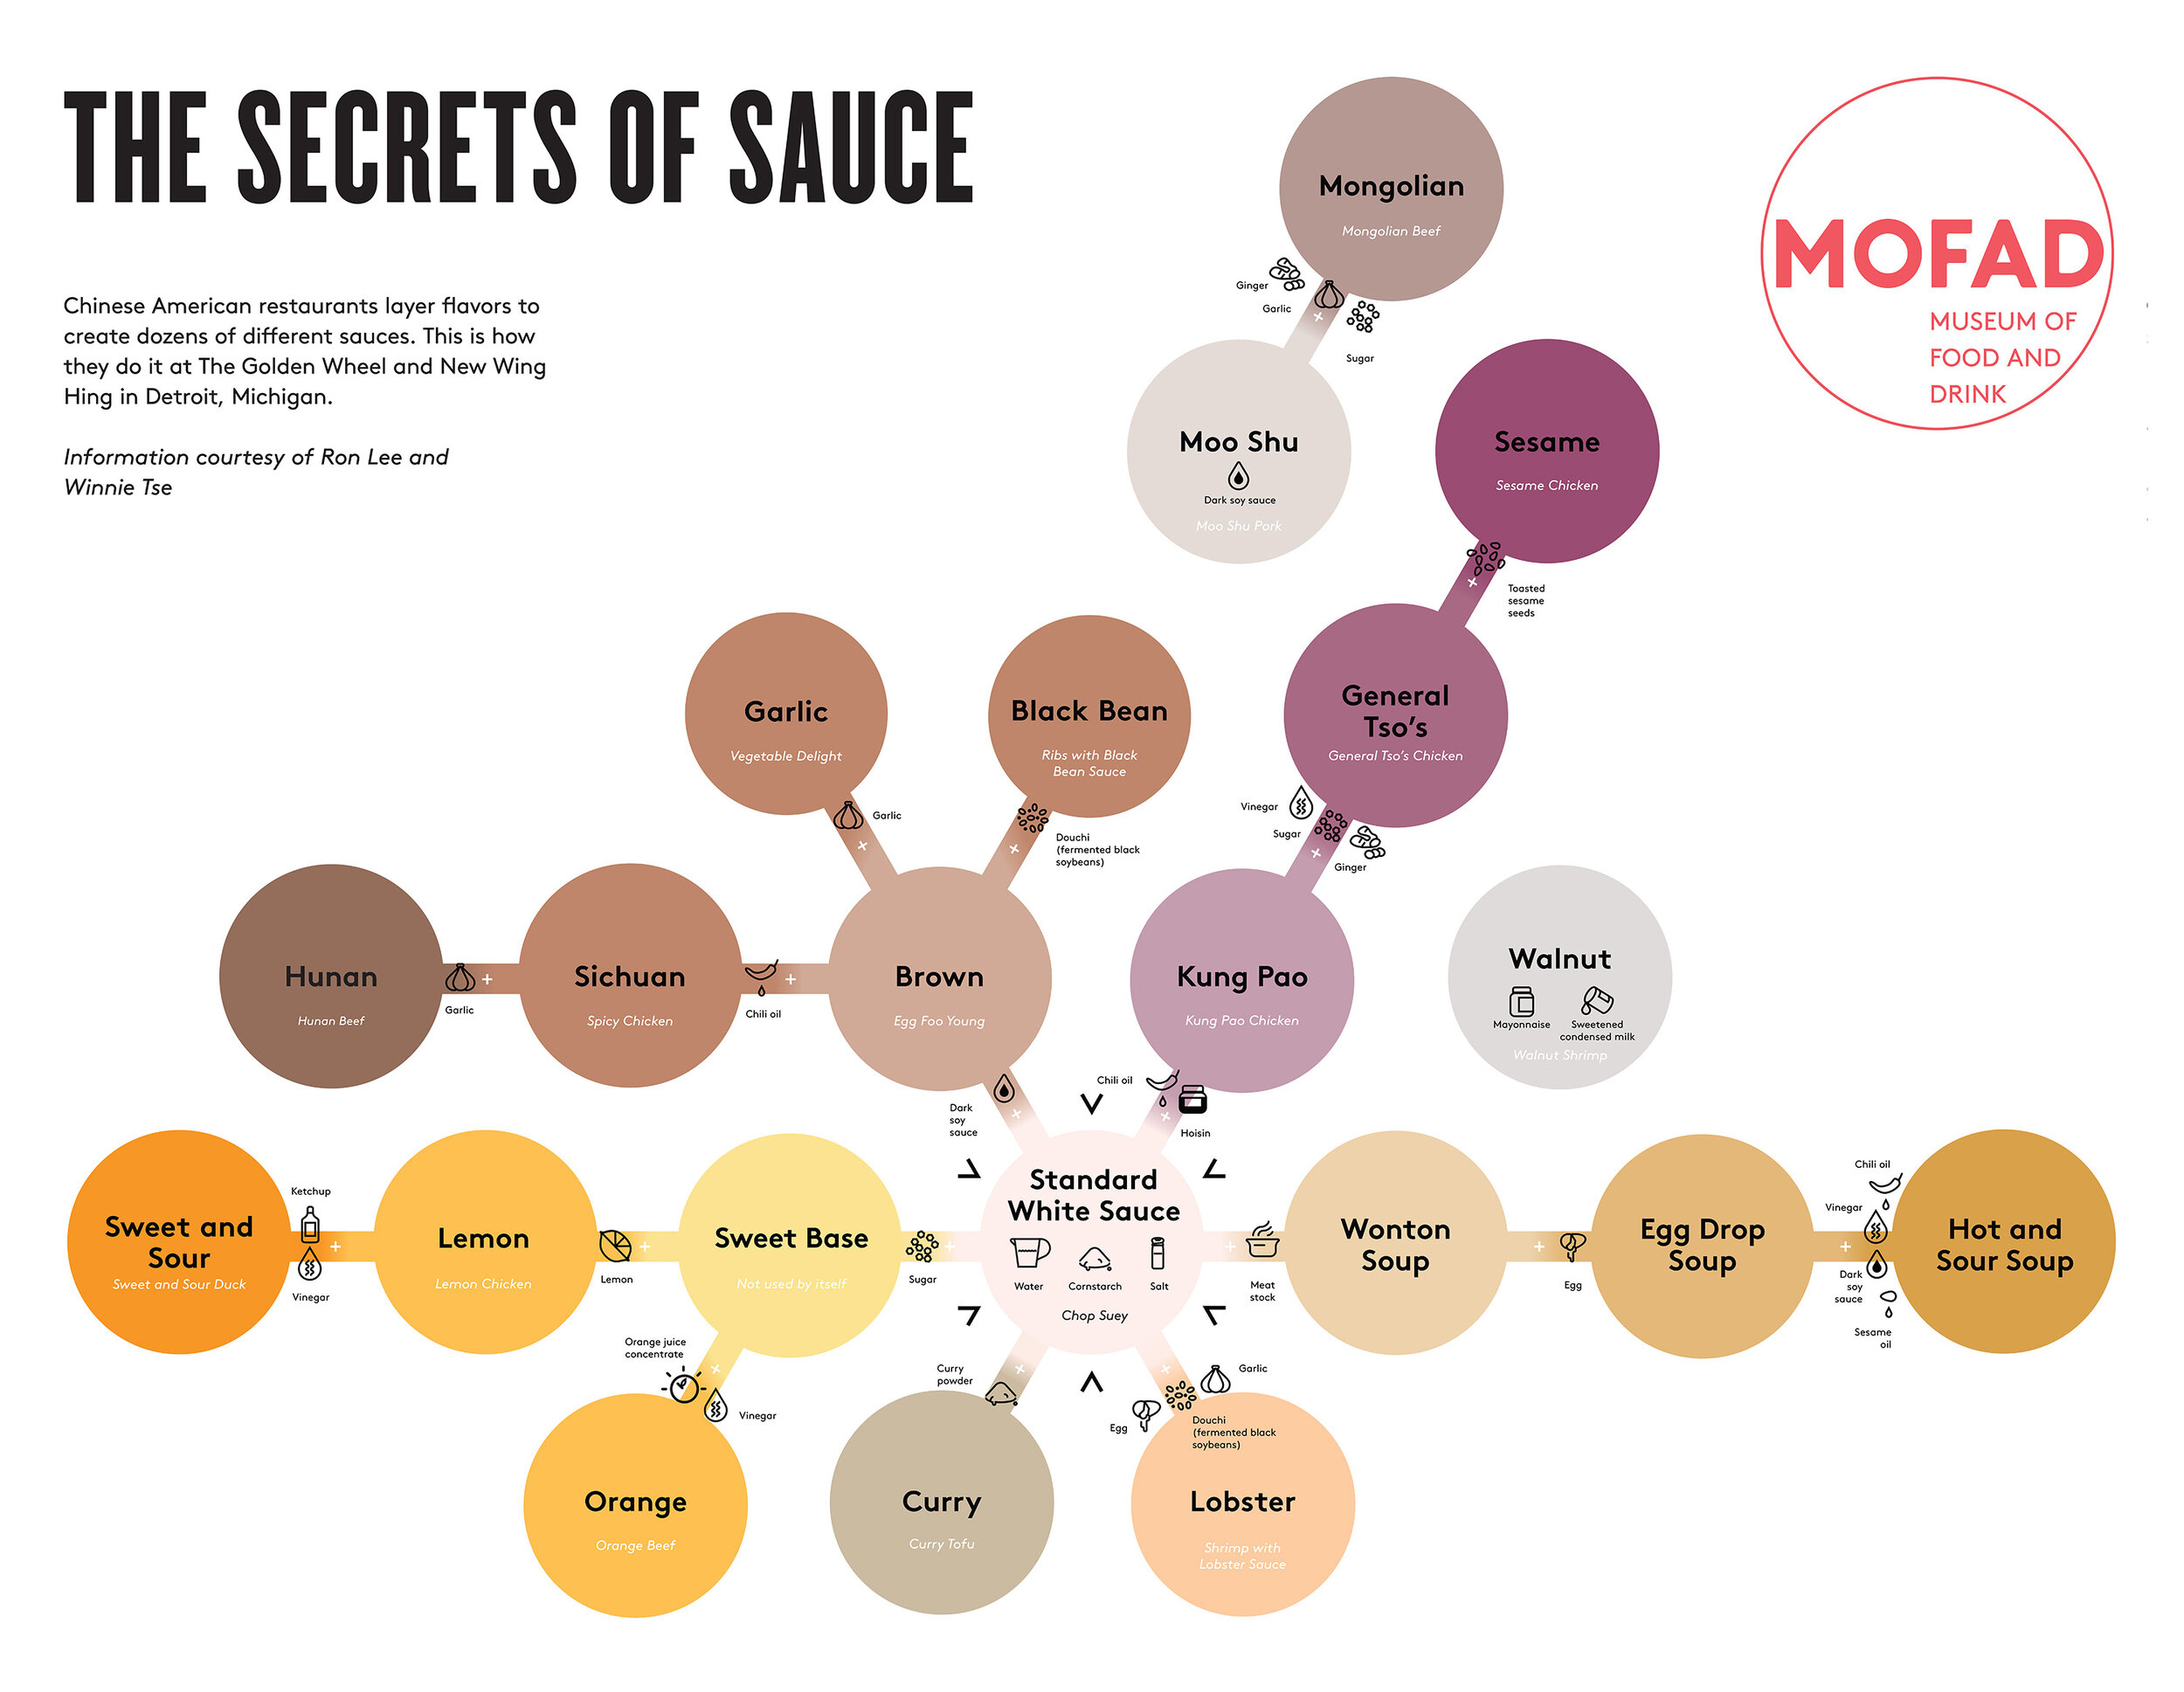 The Secrets of Sauce